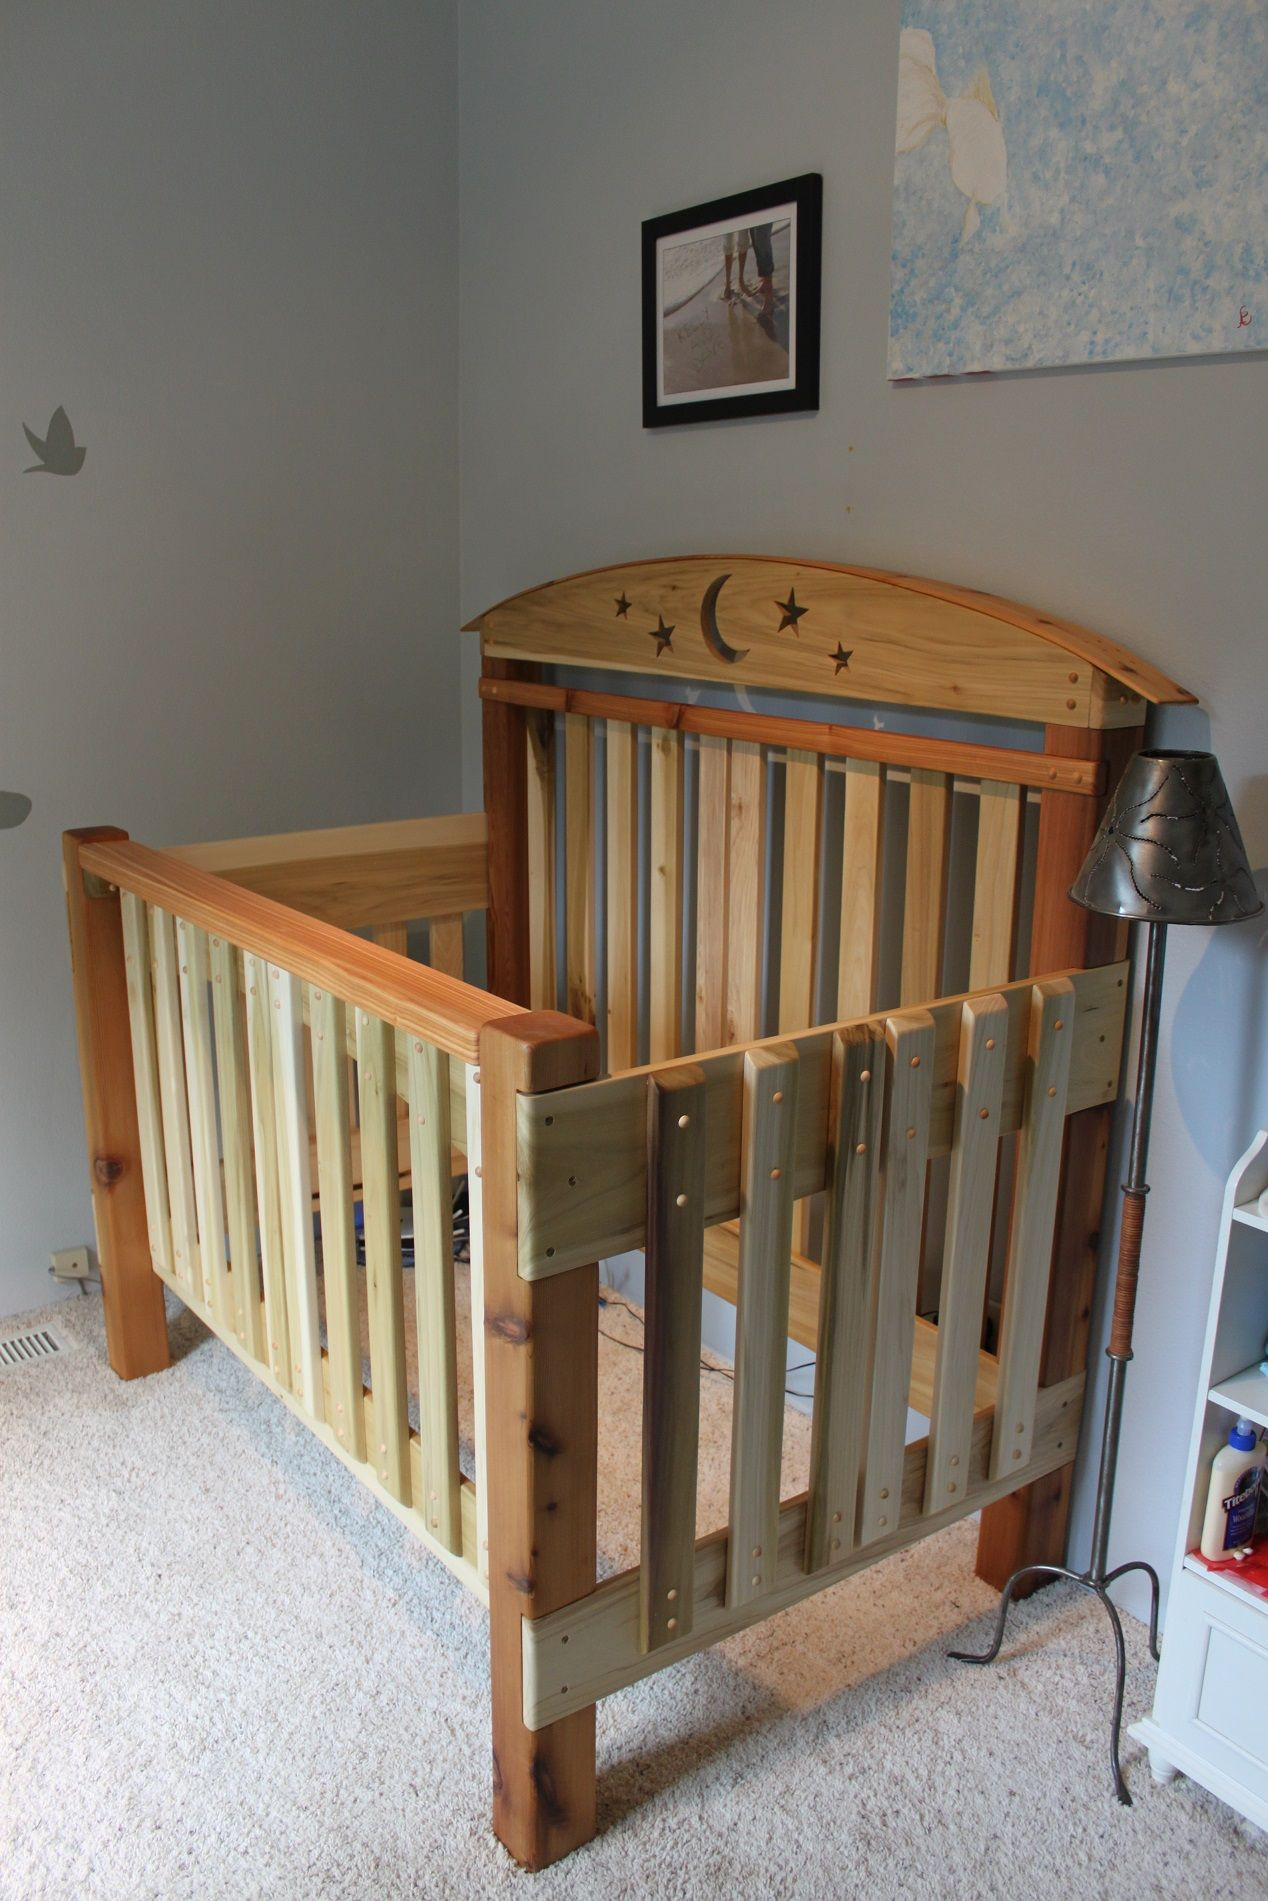 DIY Toddler Bed From Crib
 Crib Build Made pletely of Cedar and Poplar